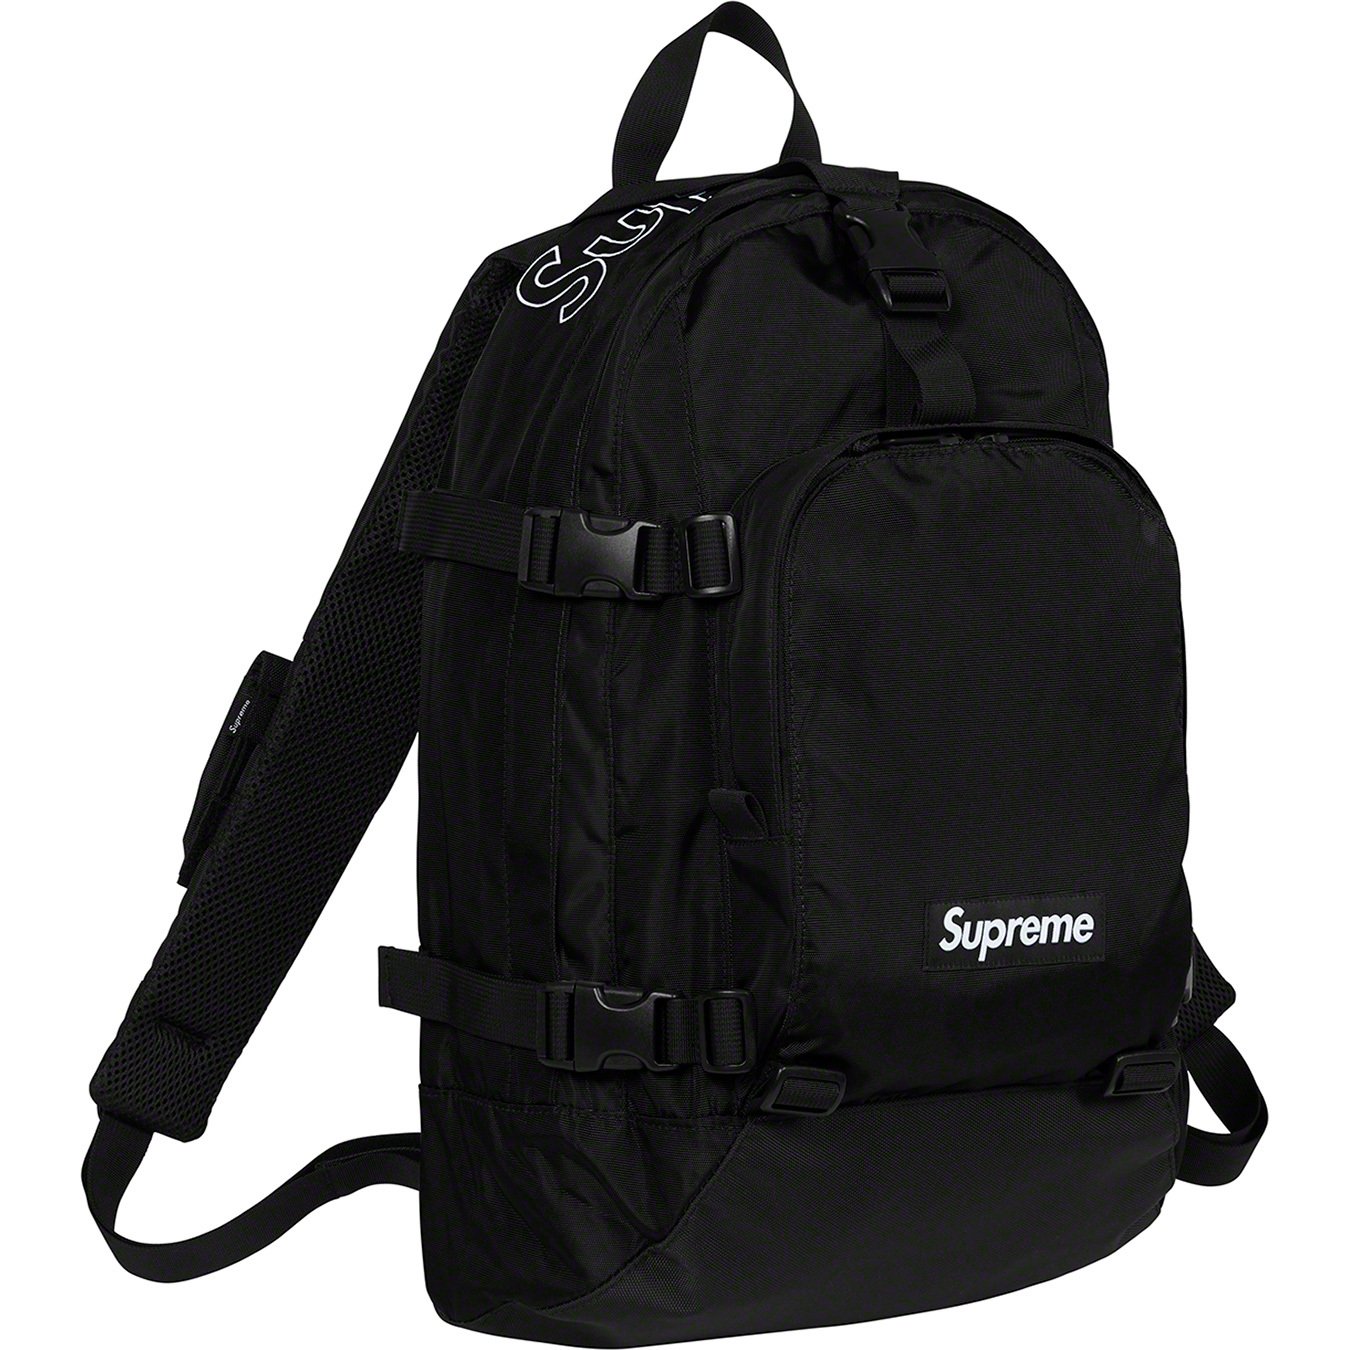 Backpack - fall winter 2019 - Supreme